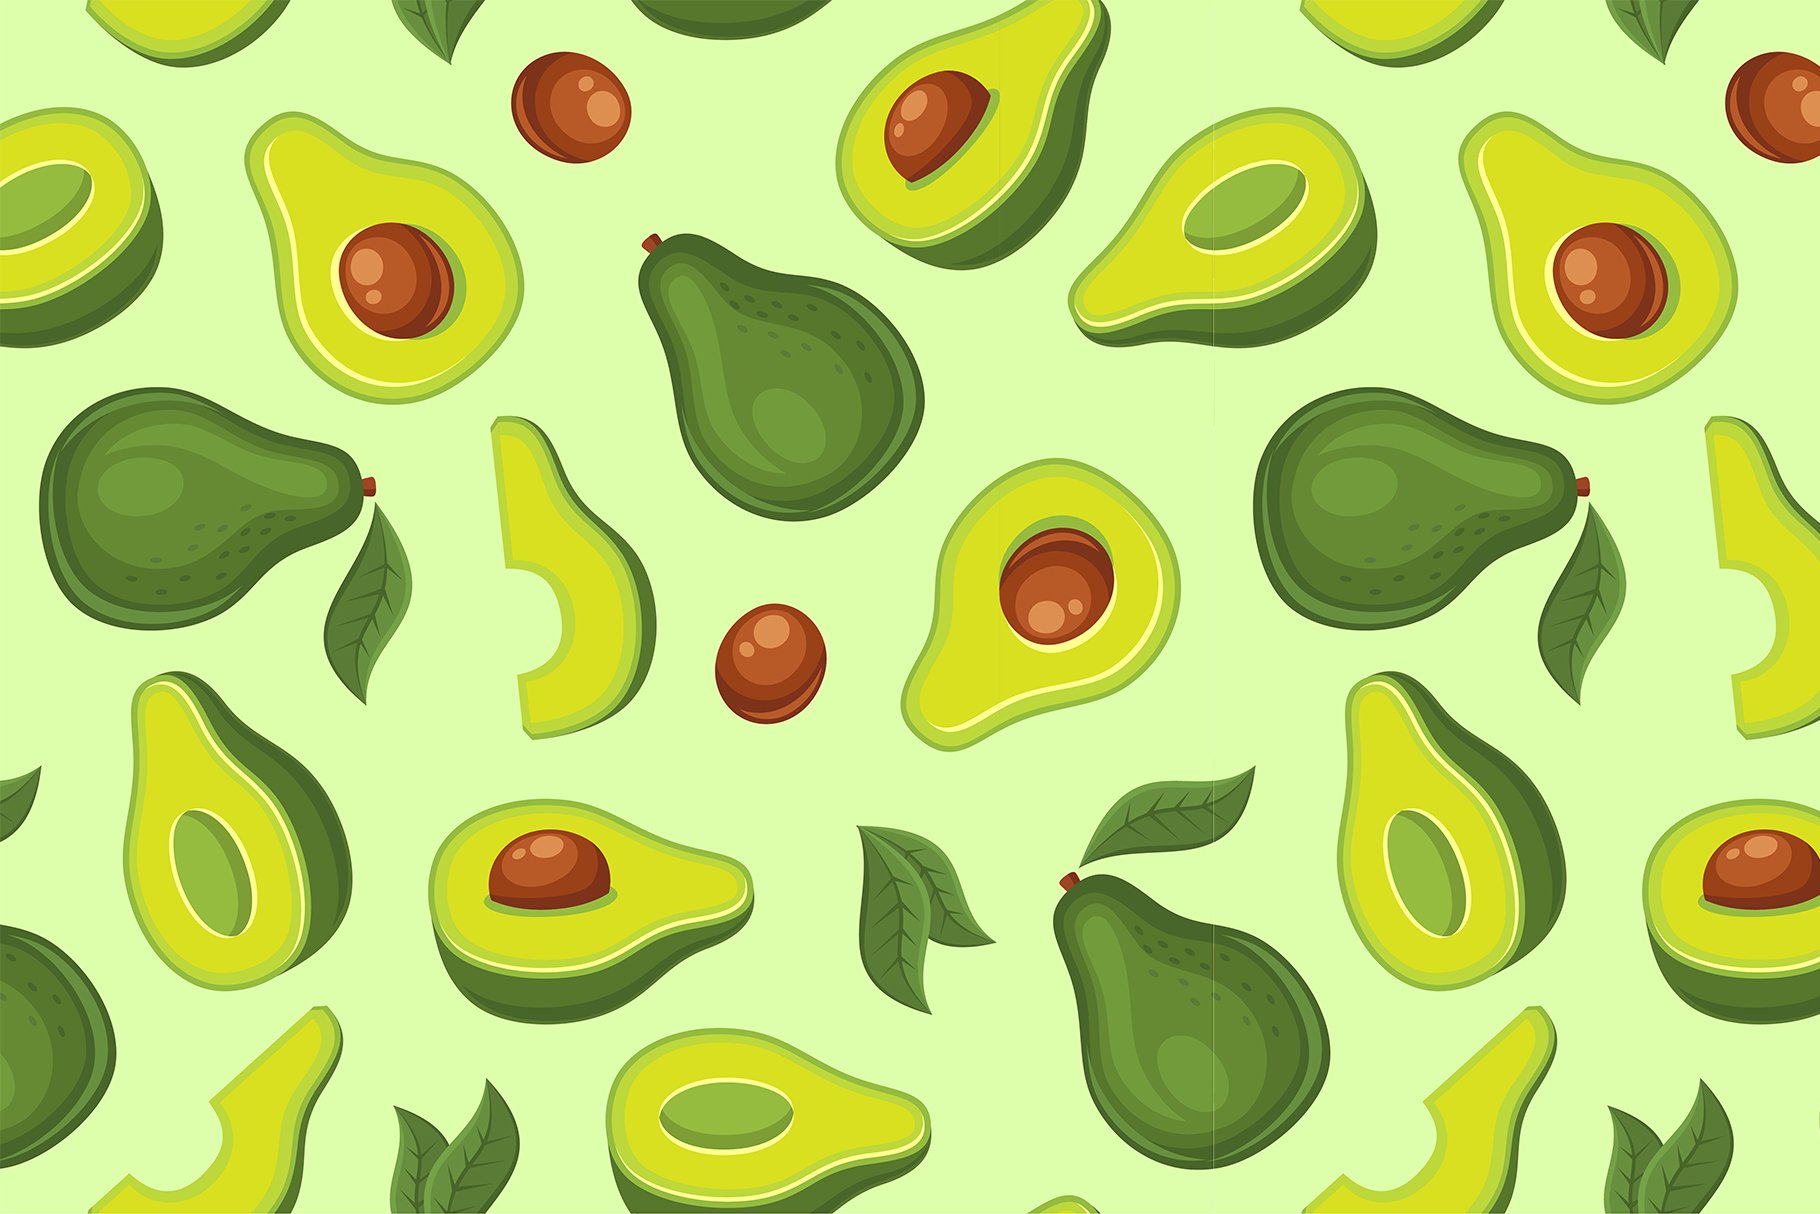 Avocado Fruit Seamless Pattern cover image.